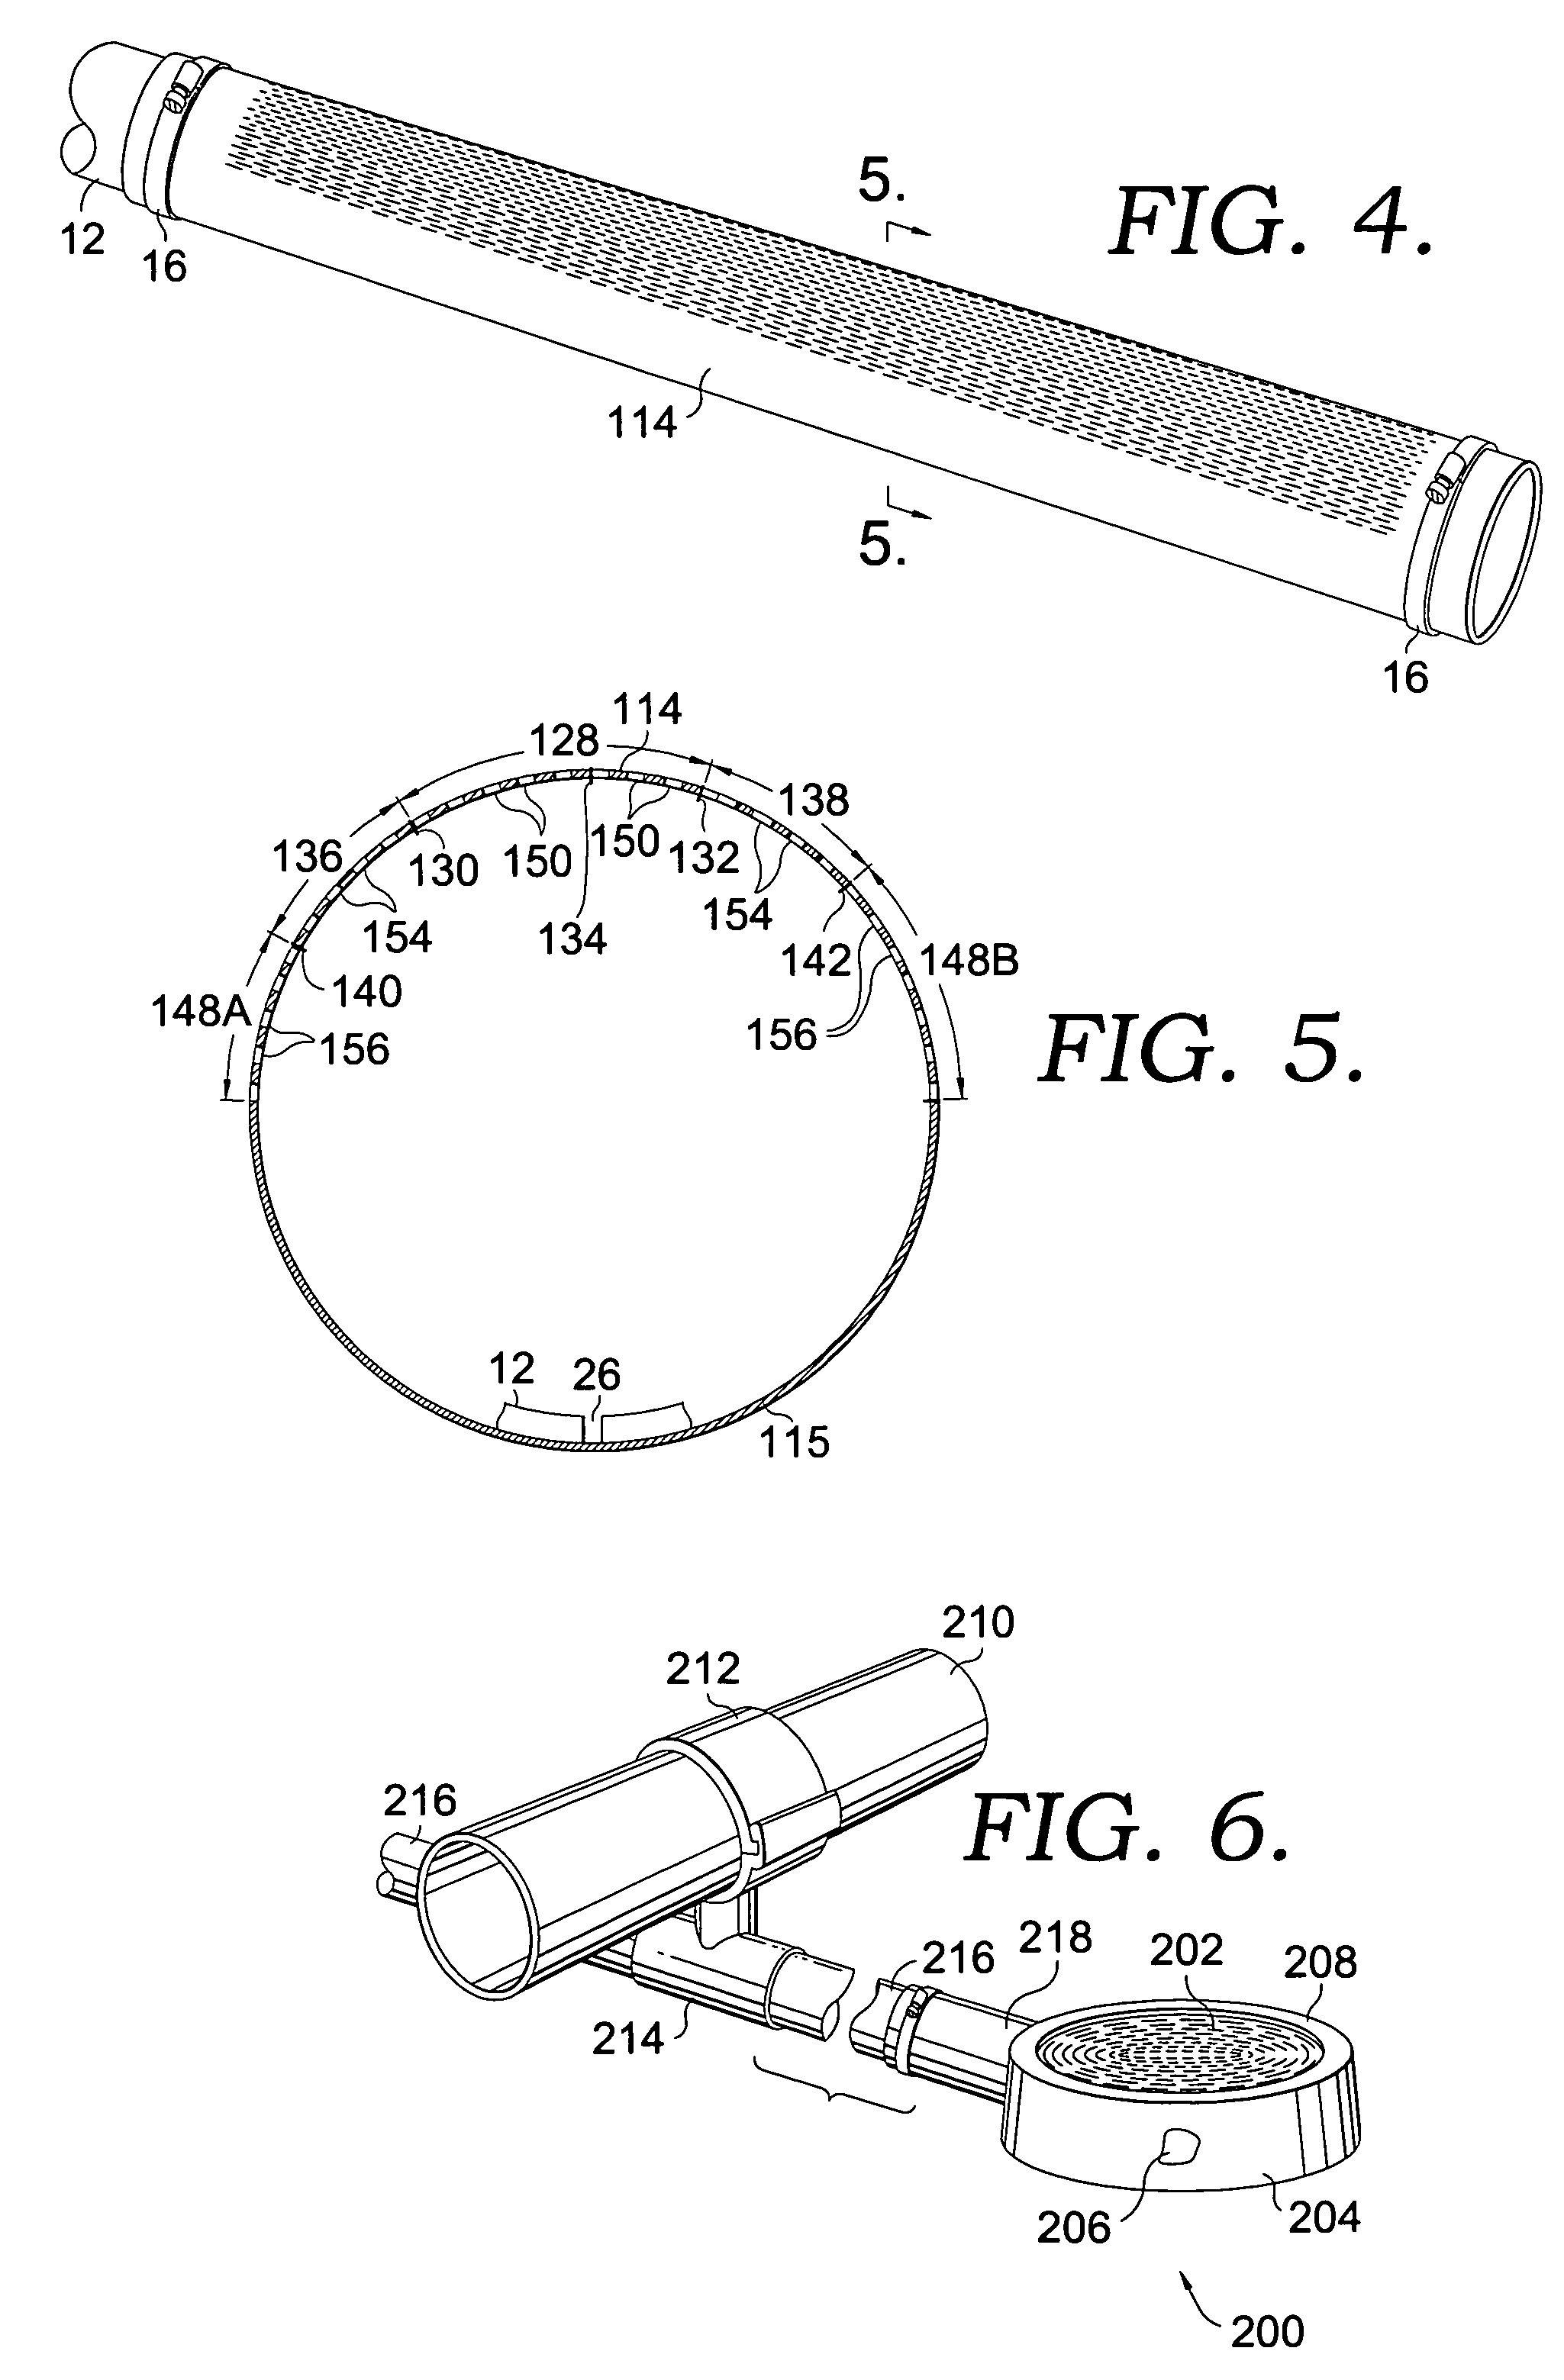 Membrane diffuser with uniform gas distribution